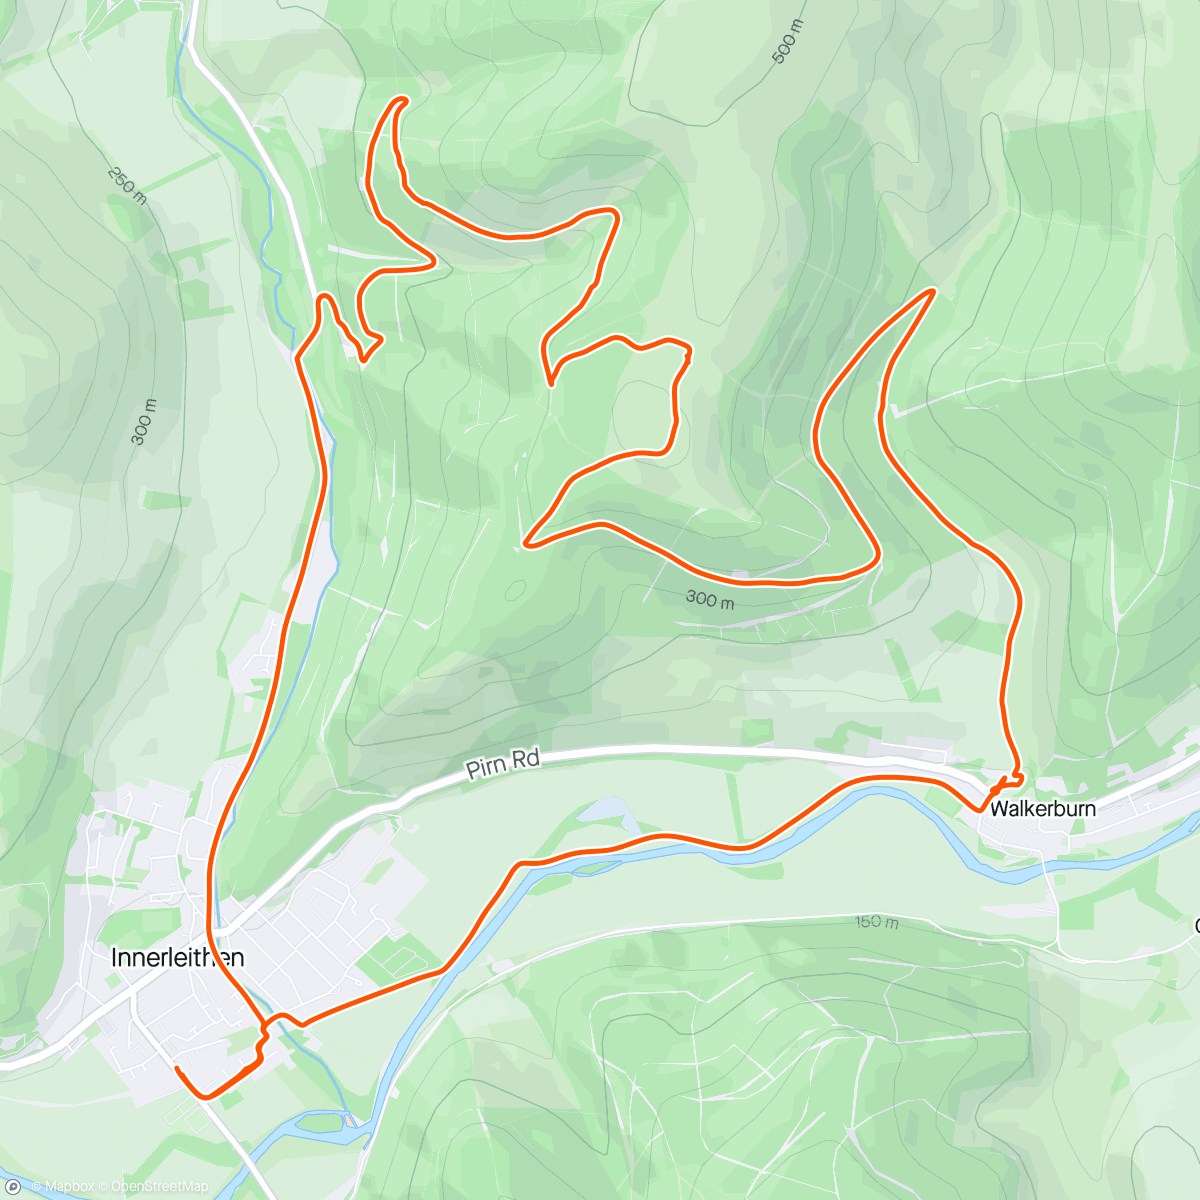 Map of the activity, Innerleithen, Kirriemuir Law Reservoir, Walkerburn loop with Carrie. Quite a climb!